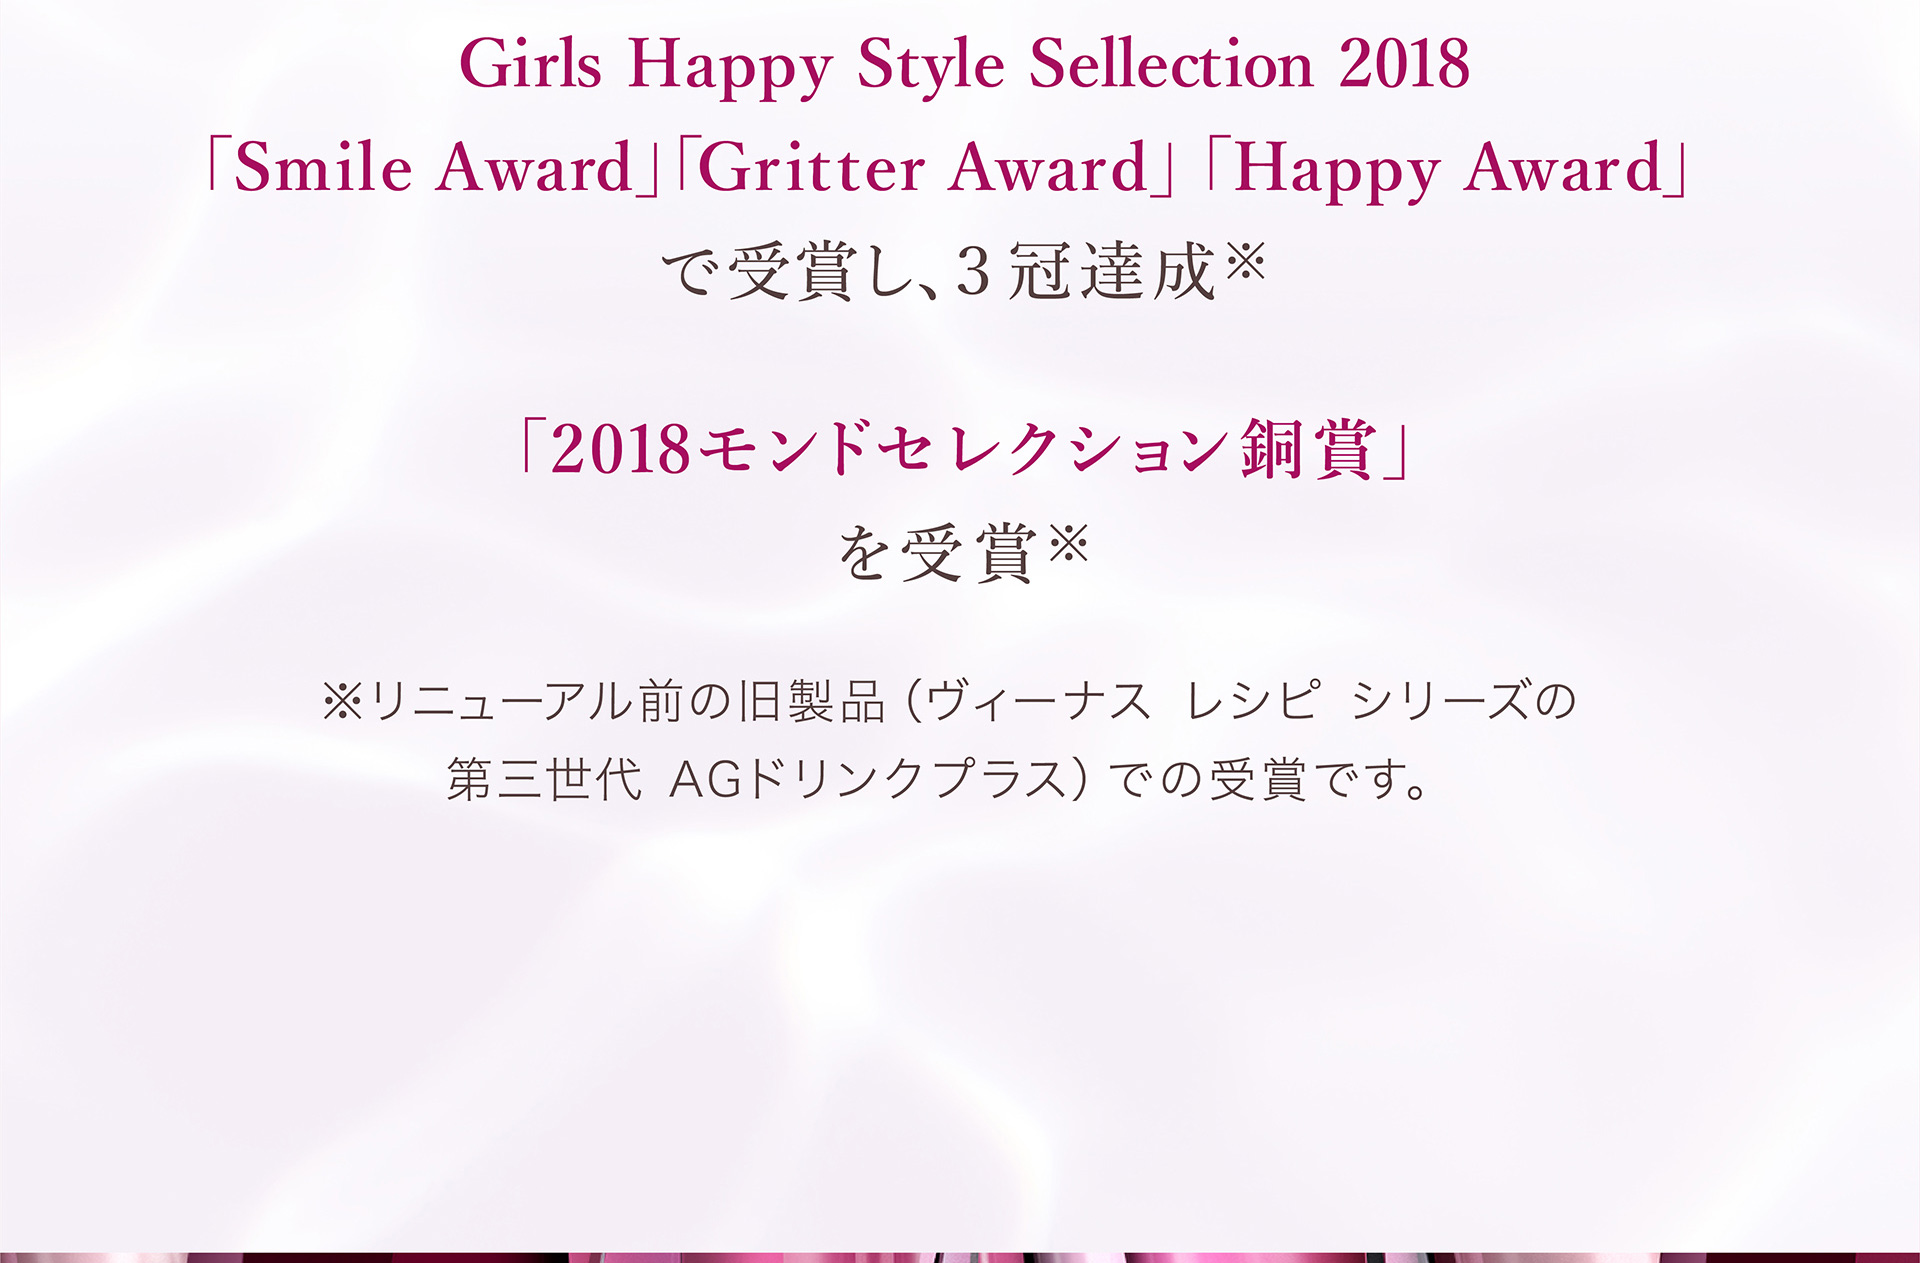 Girls Happy Style Sellection 2018 「Smile Award」「Gritter Award」「Happy Award」で受賞し、３冠達成※ 「2018モンドセレクション銅賞」を受賞※